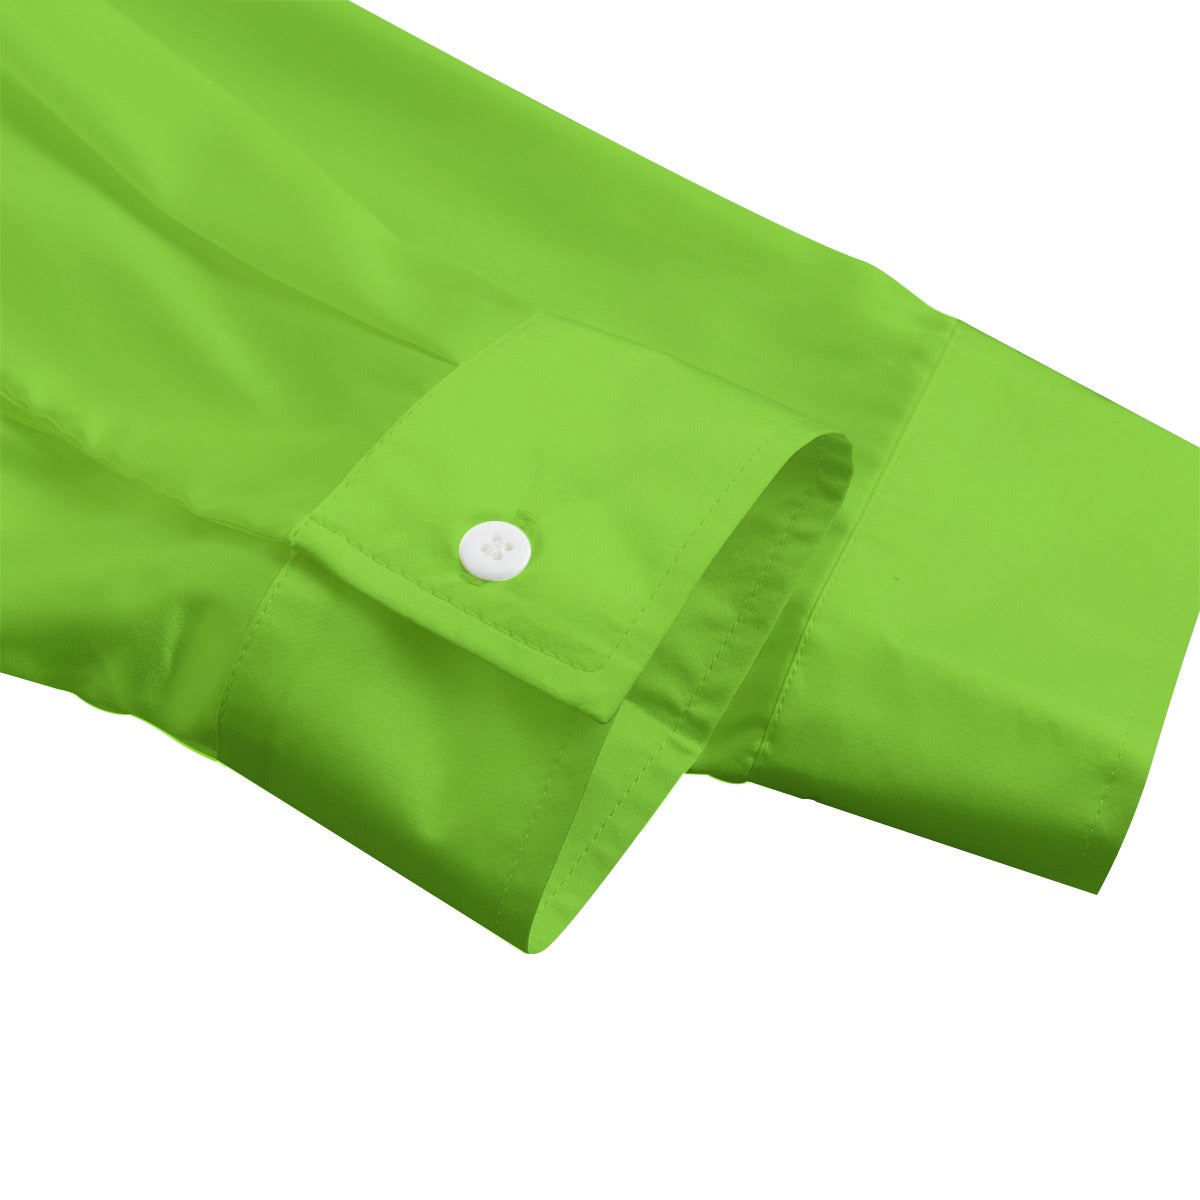 Sixty Eight 93 Logo White Green Apple Unisex Imitation Silk Pajama Set